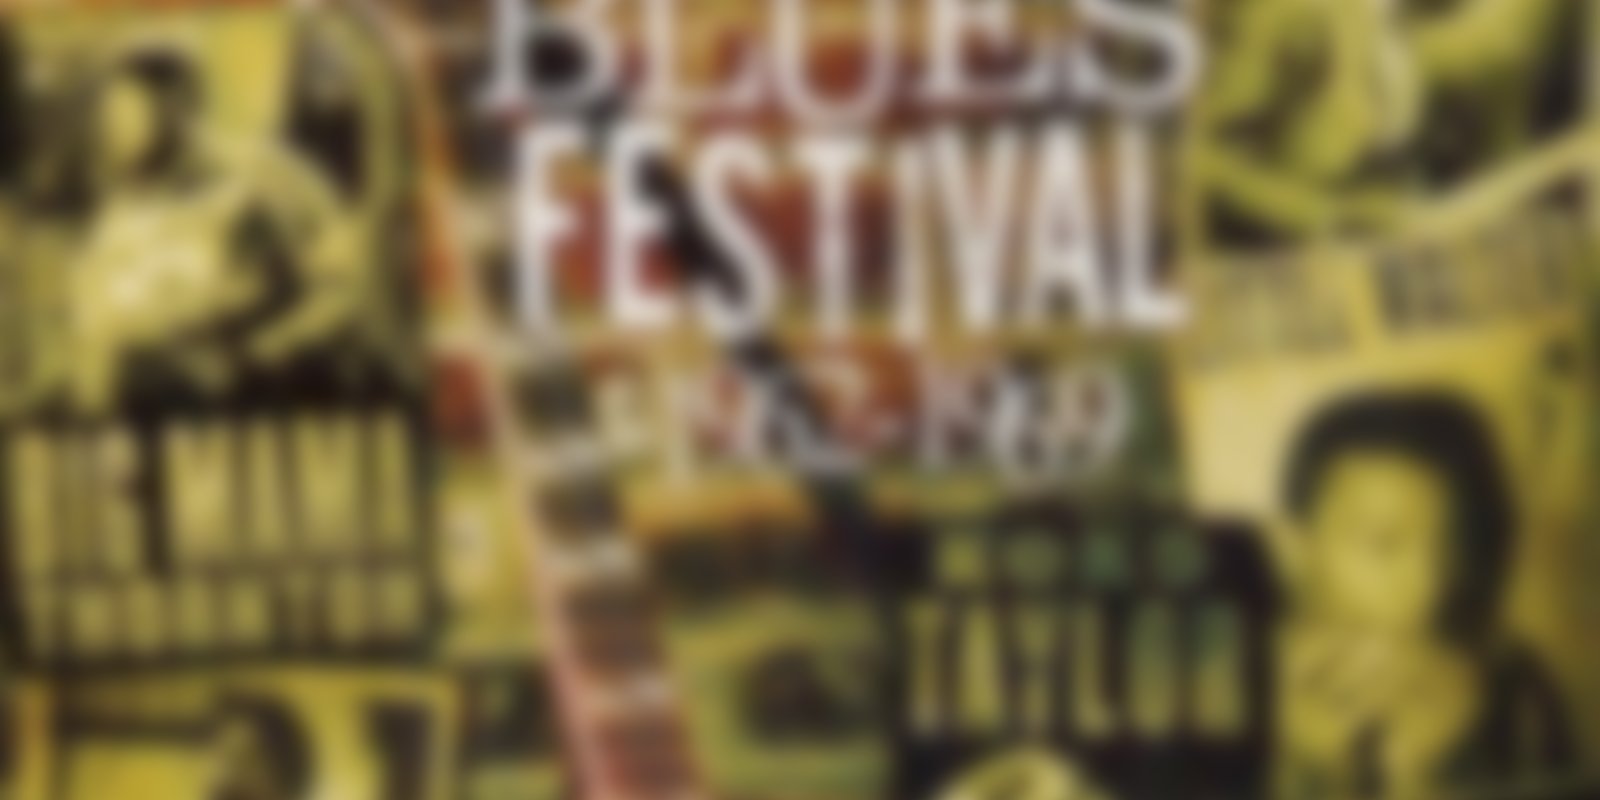 The American Folk Blues Festival 1962-1969